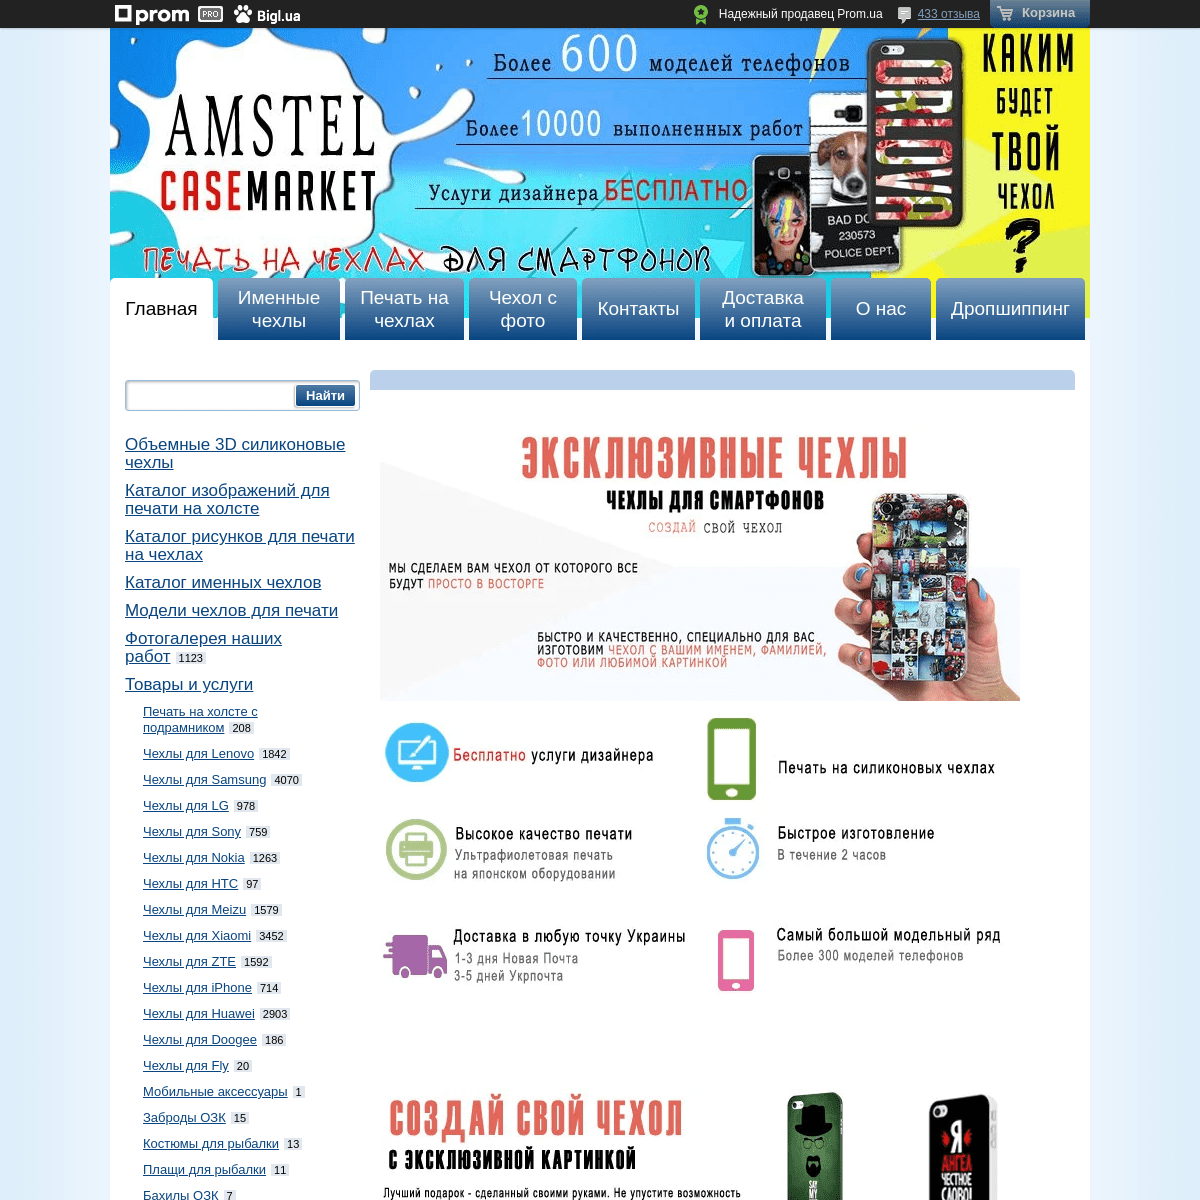 A complete backup of amstel.com.ua